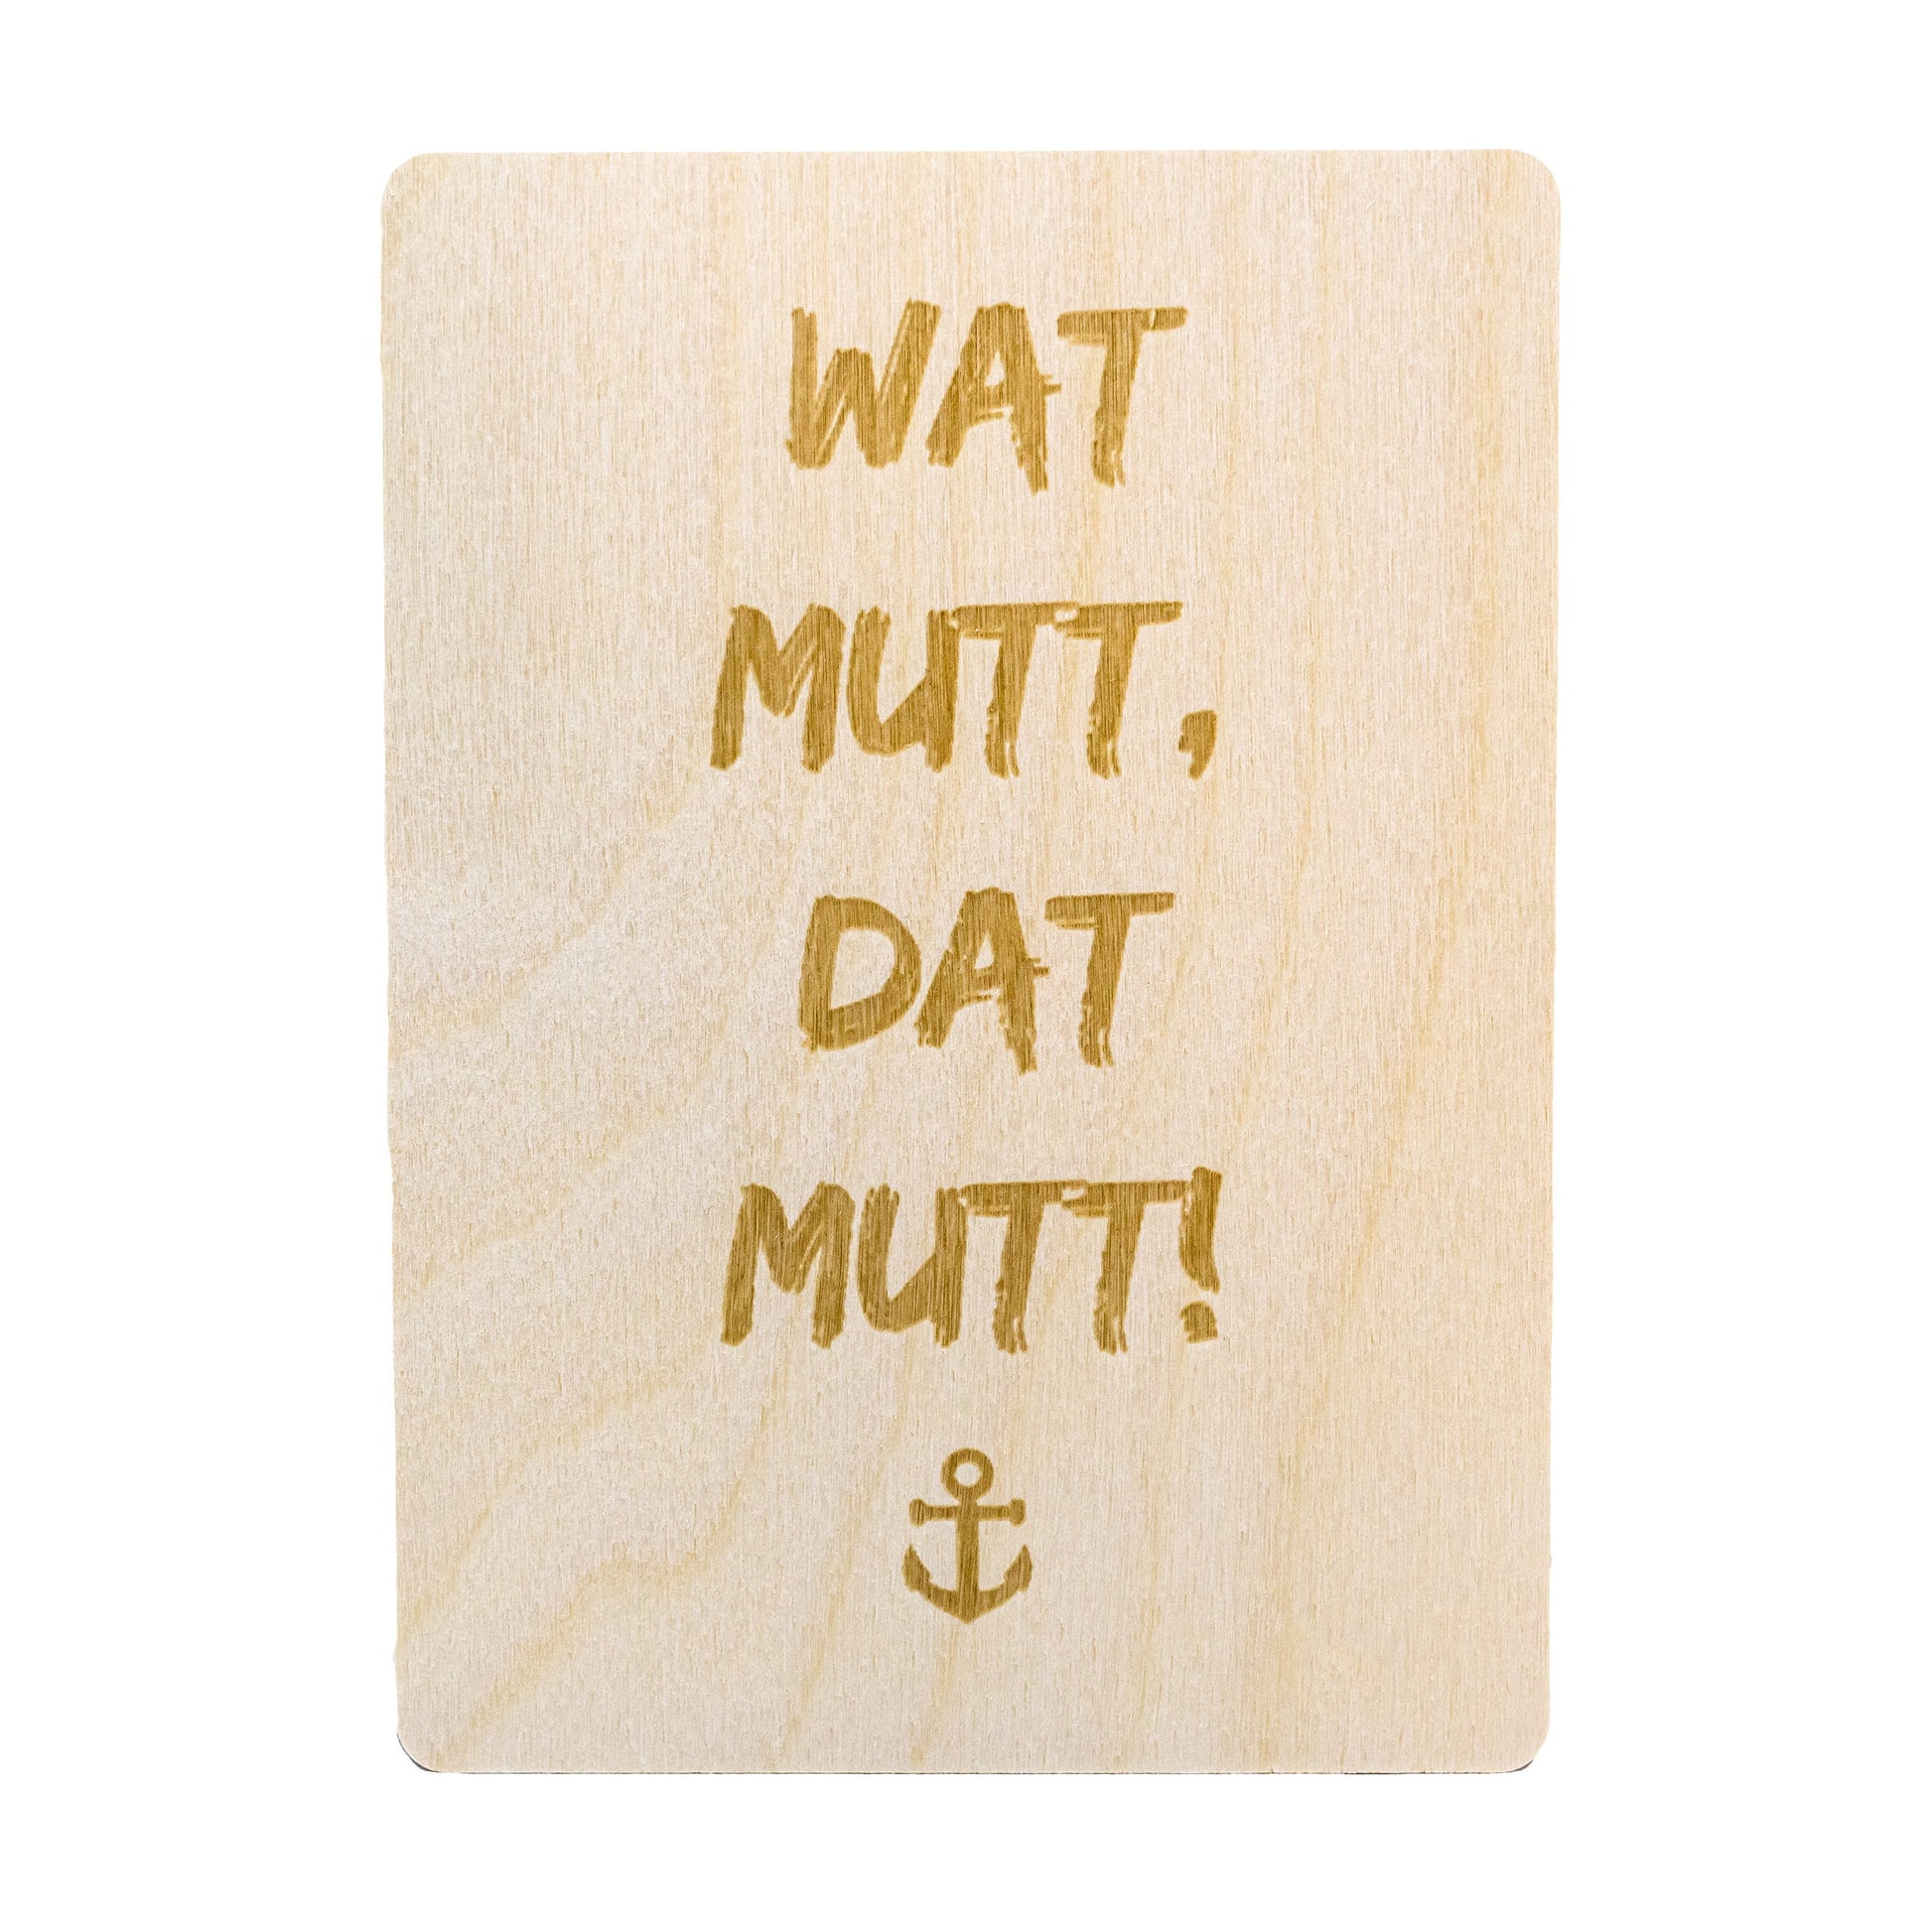 Holzpostkarte • wat mutt dat mutt • maritim • Holzkarte • Postkarte mit maritimem Motiv - Lasergravur